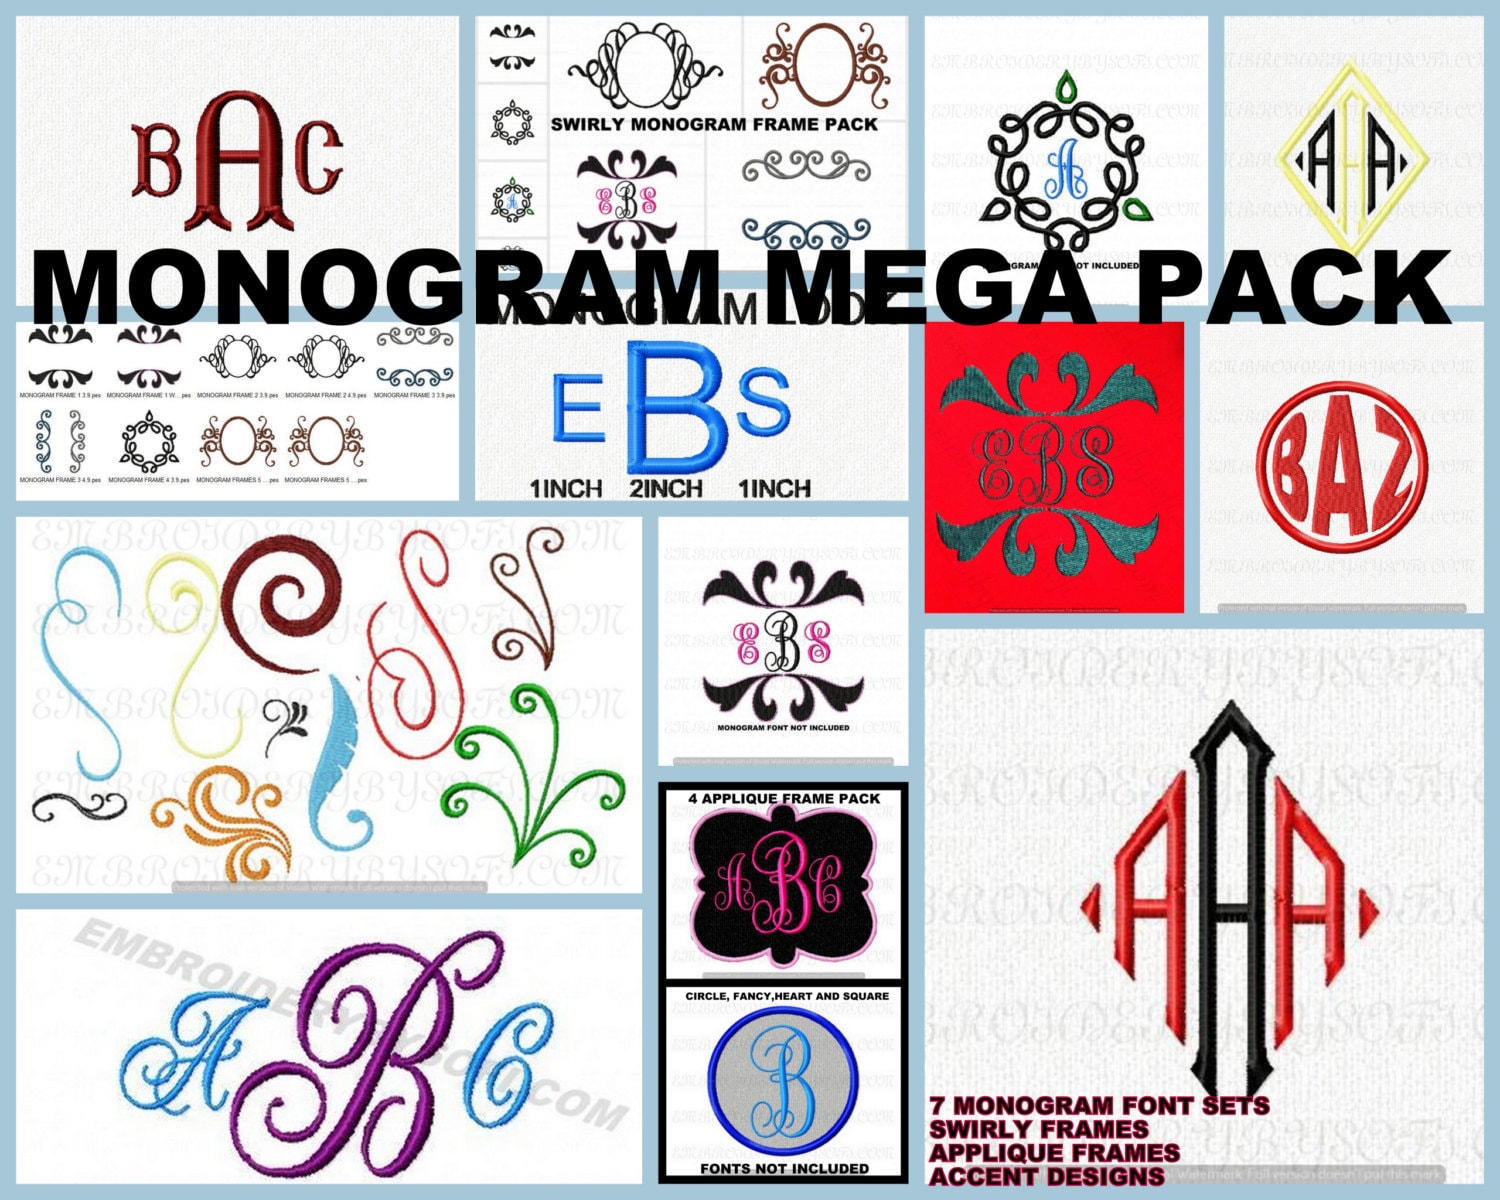 Download PES Monogram swirlinterlockvine font mega pack monogram